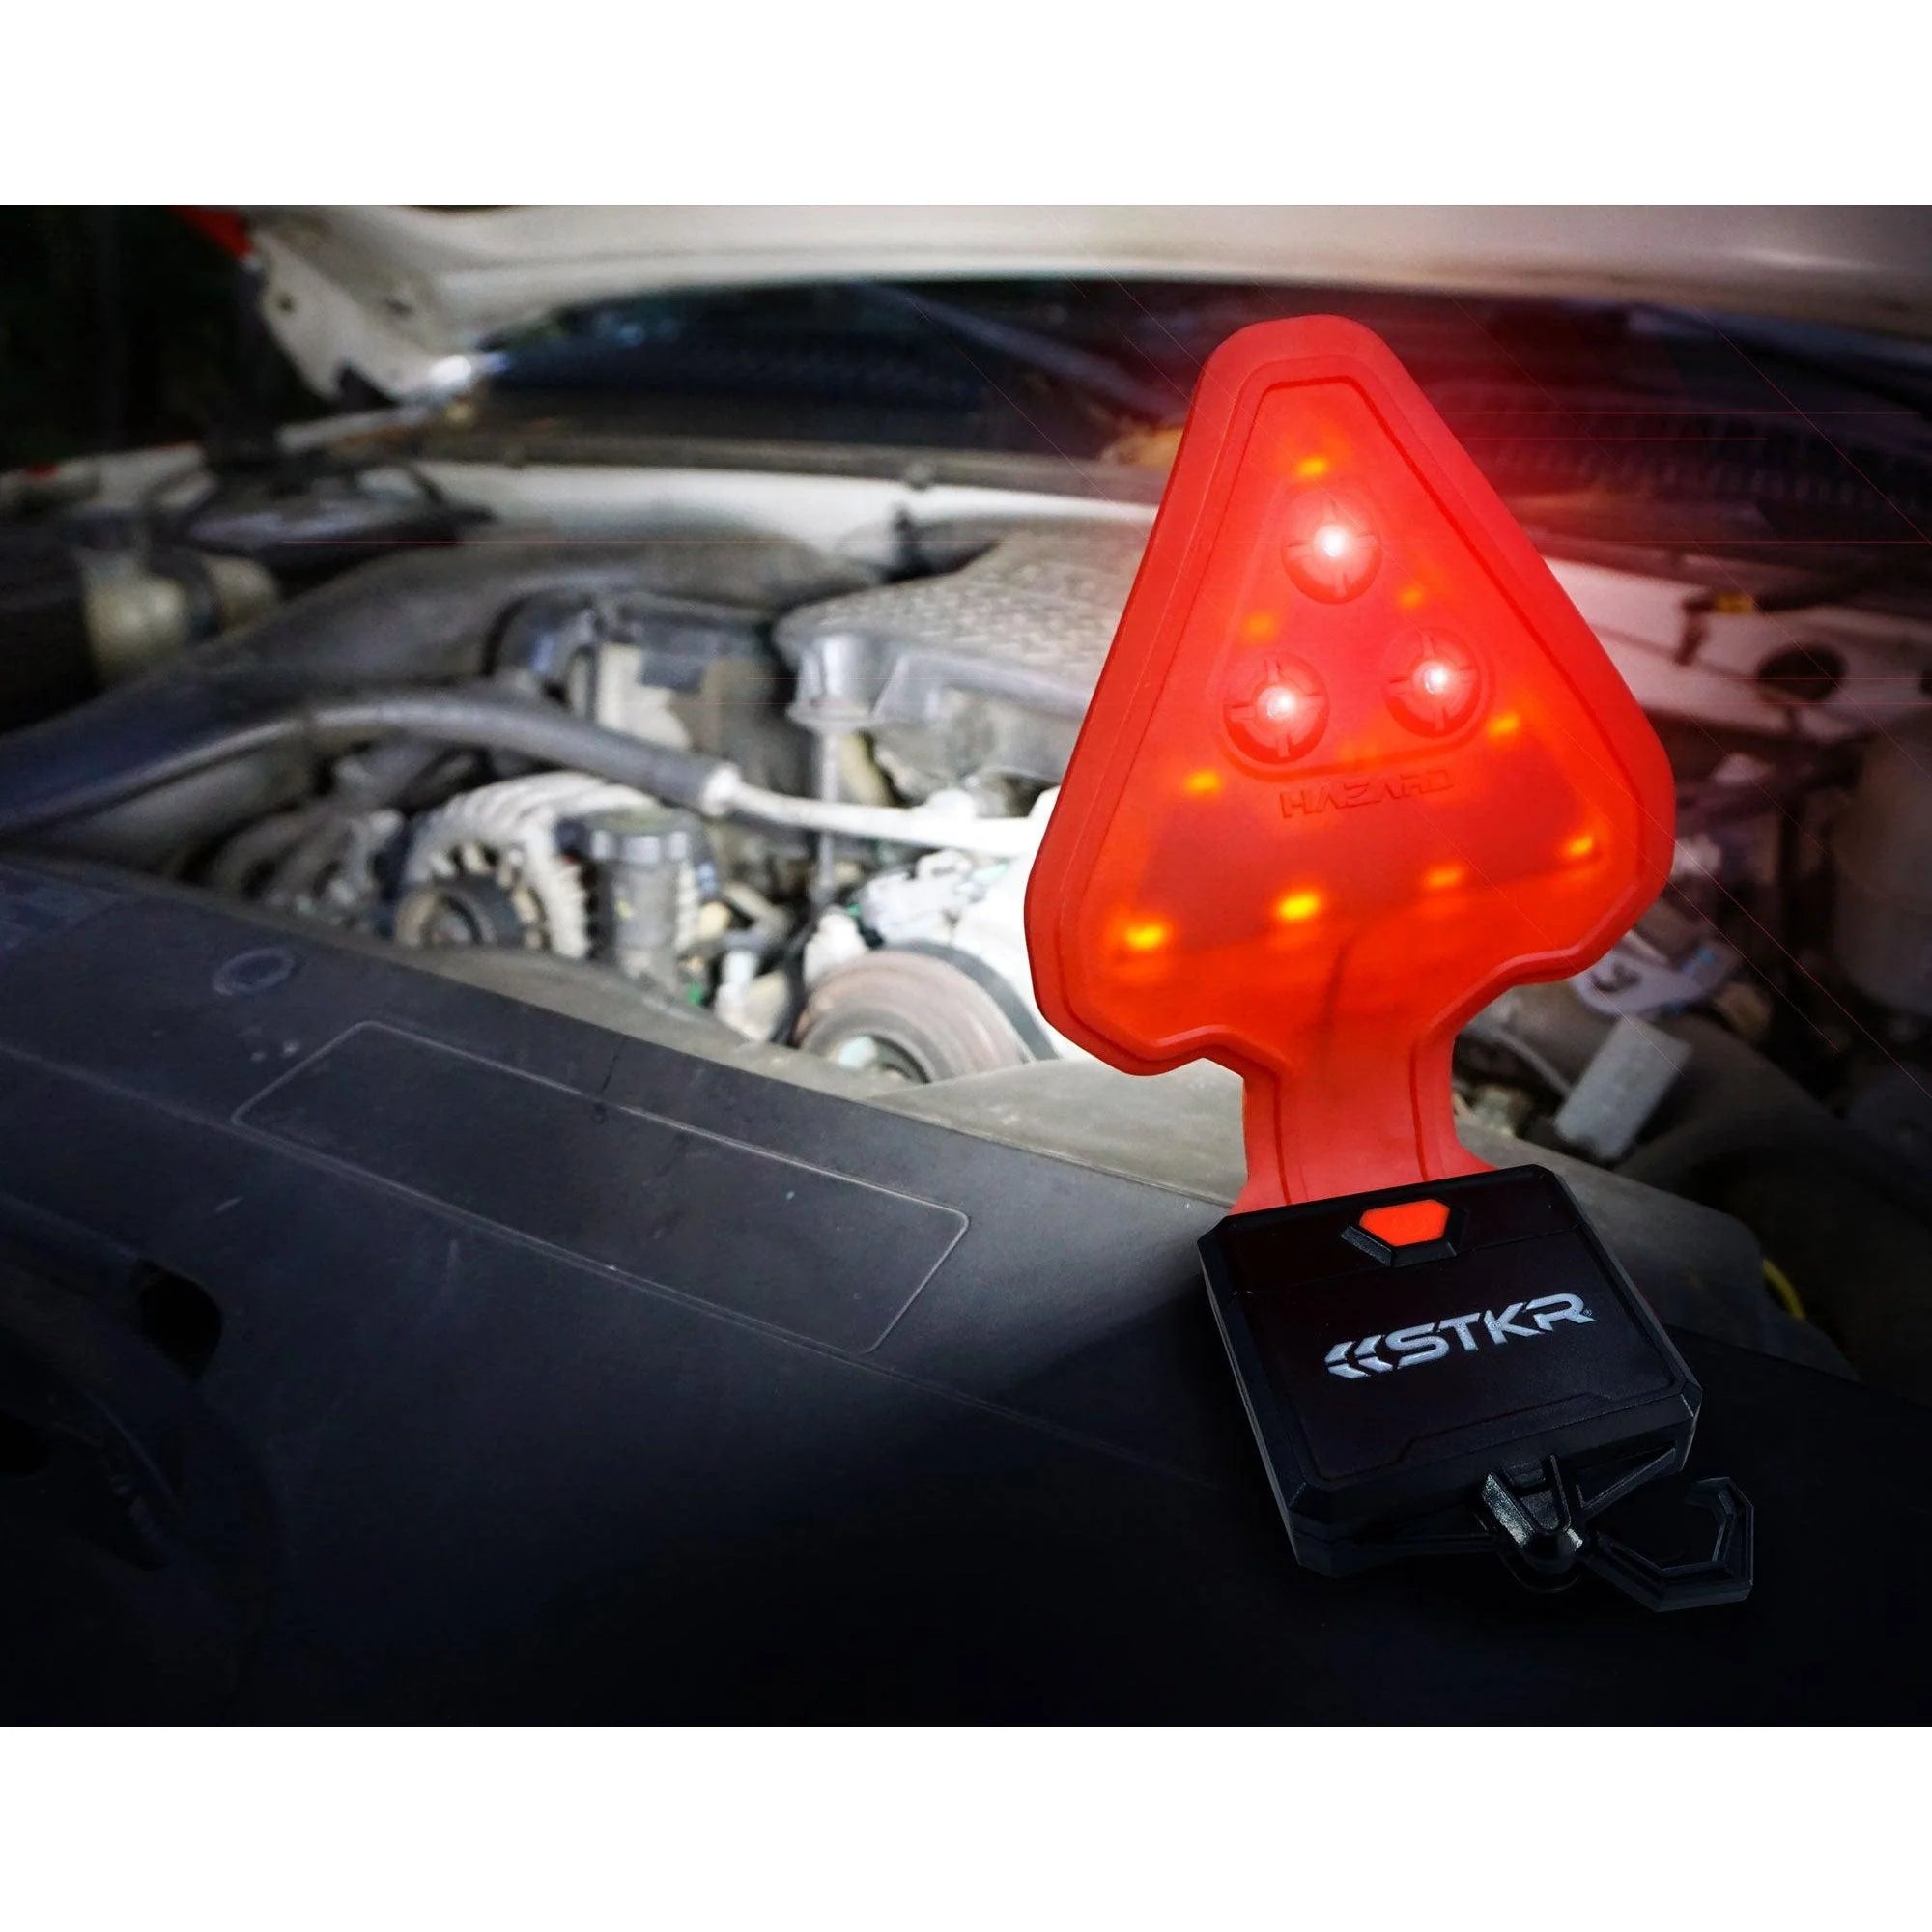 STKR Concepts Flexit Auto Roadside Safety Light